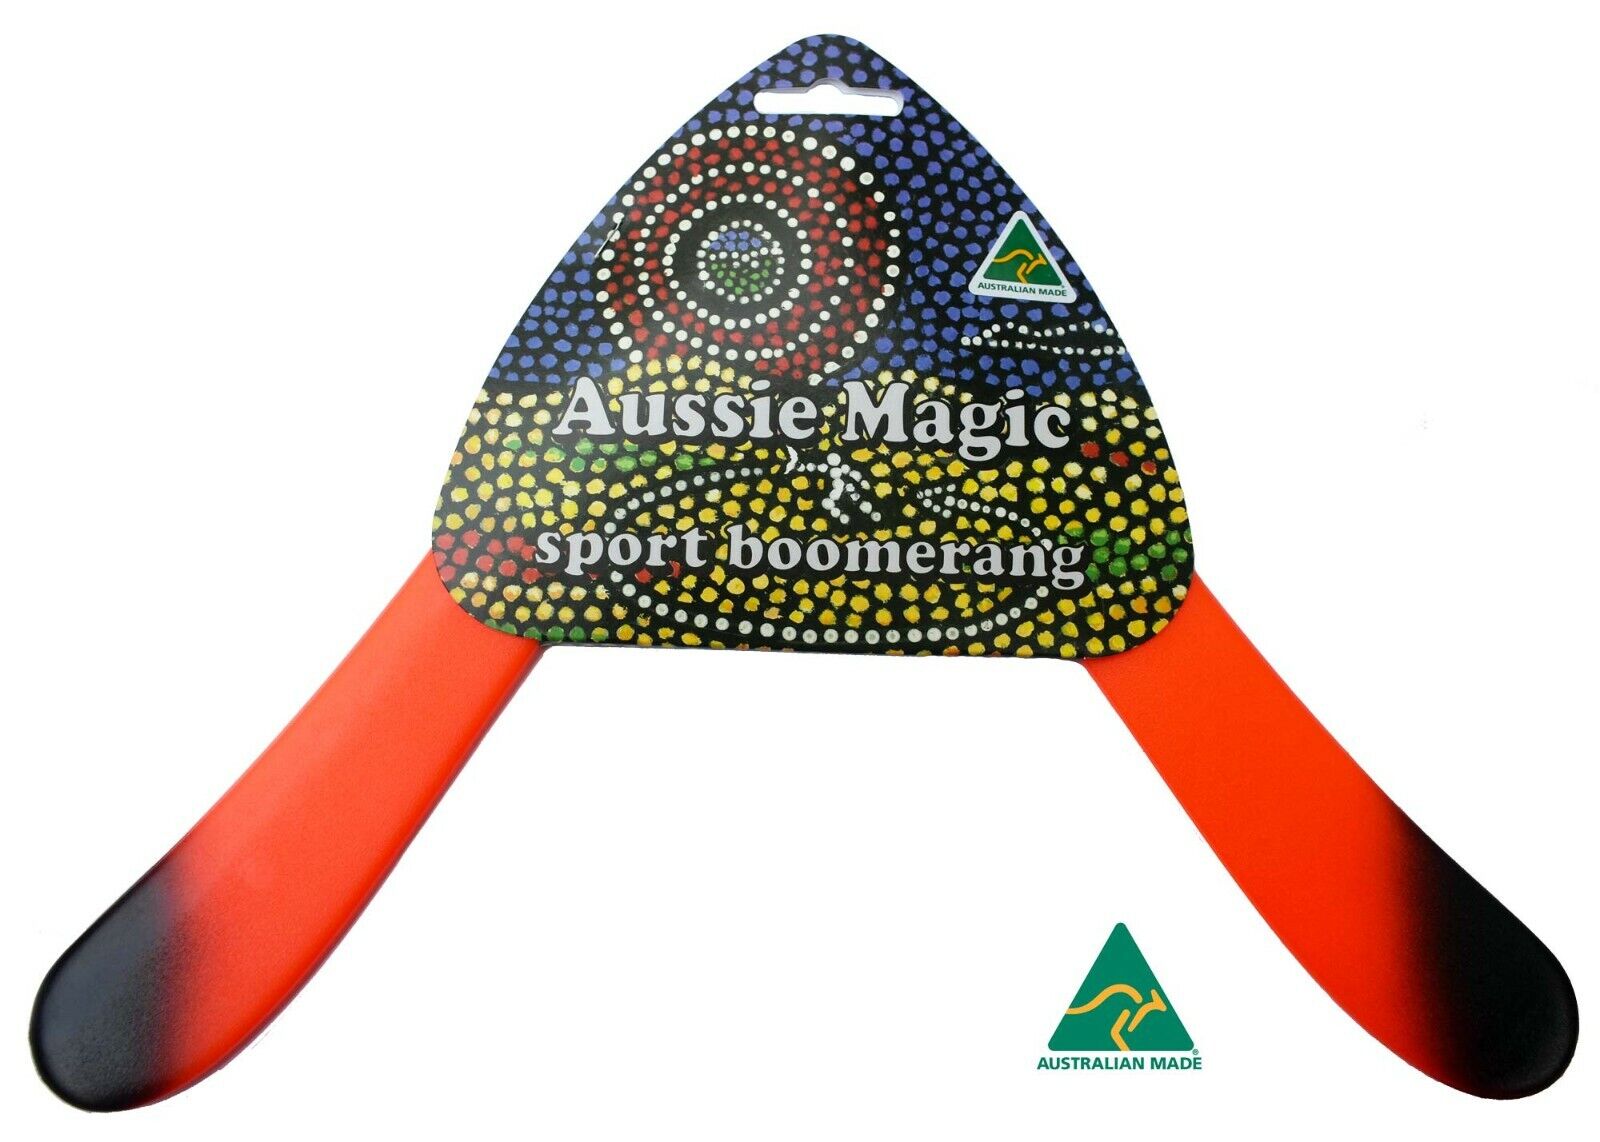 Aussie Magic Sport Boomerang, Australian Made Returning Boomerang, Right Handed